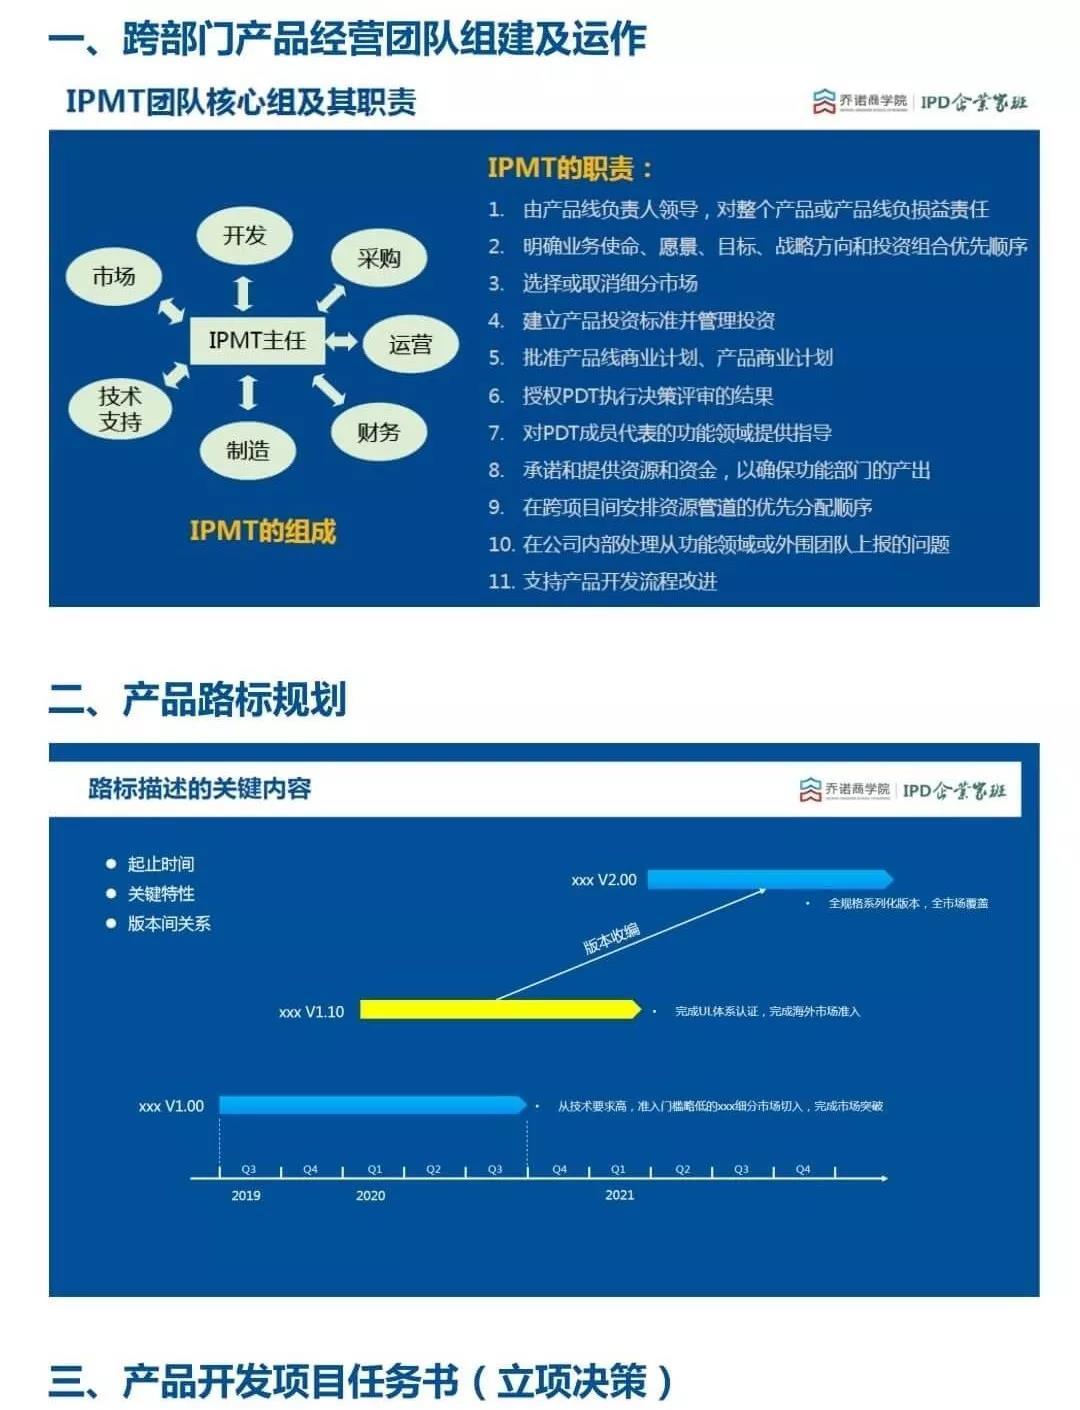 2019IPD企业家班：核心竞争力构筑之道（8月杭州班）